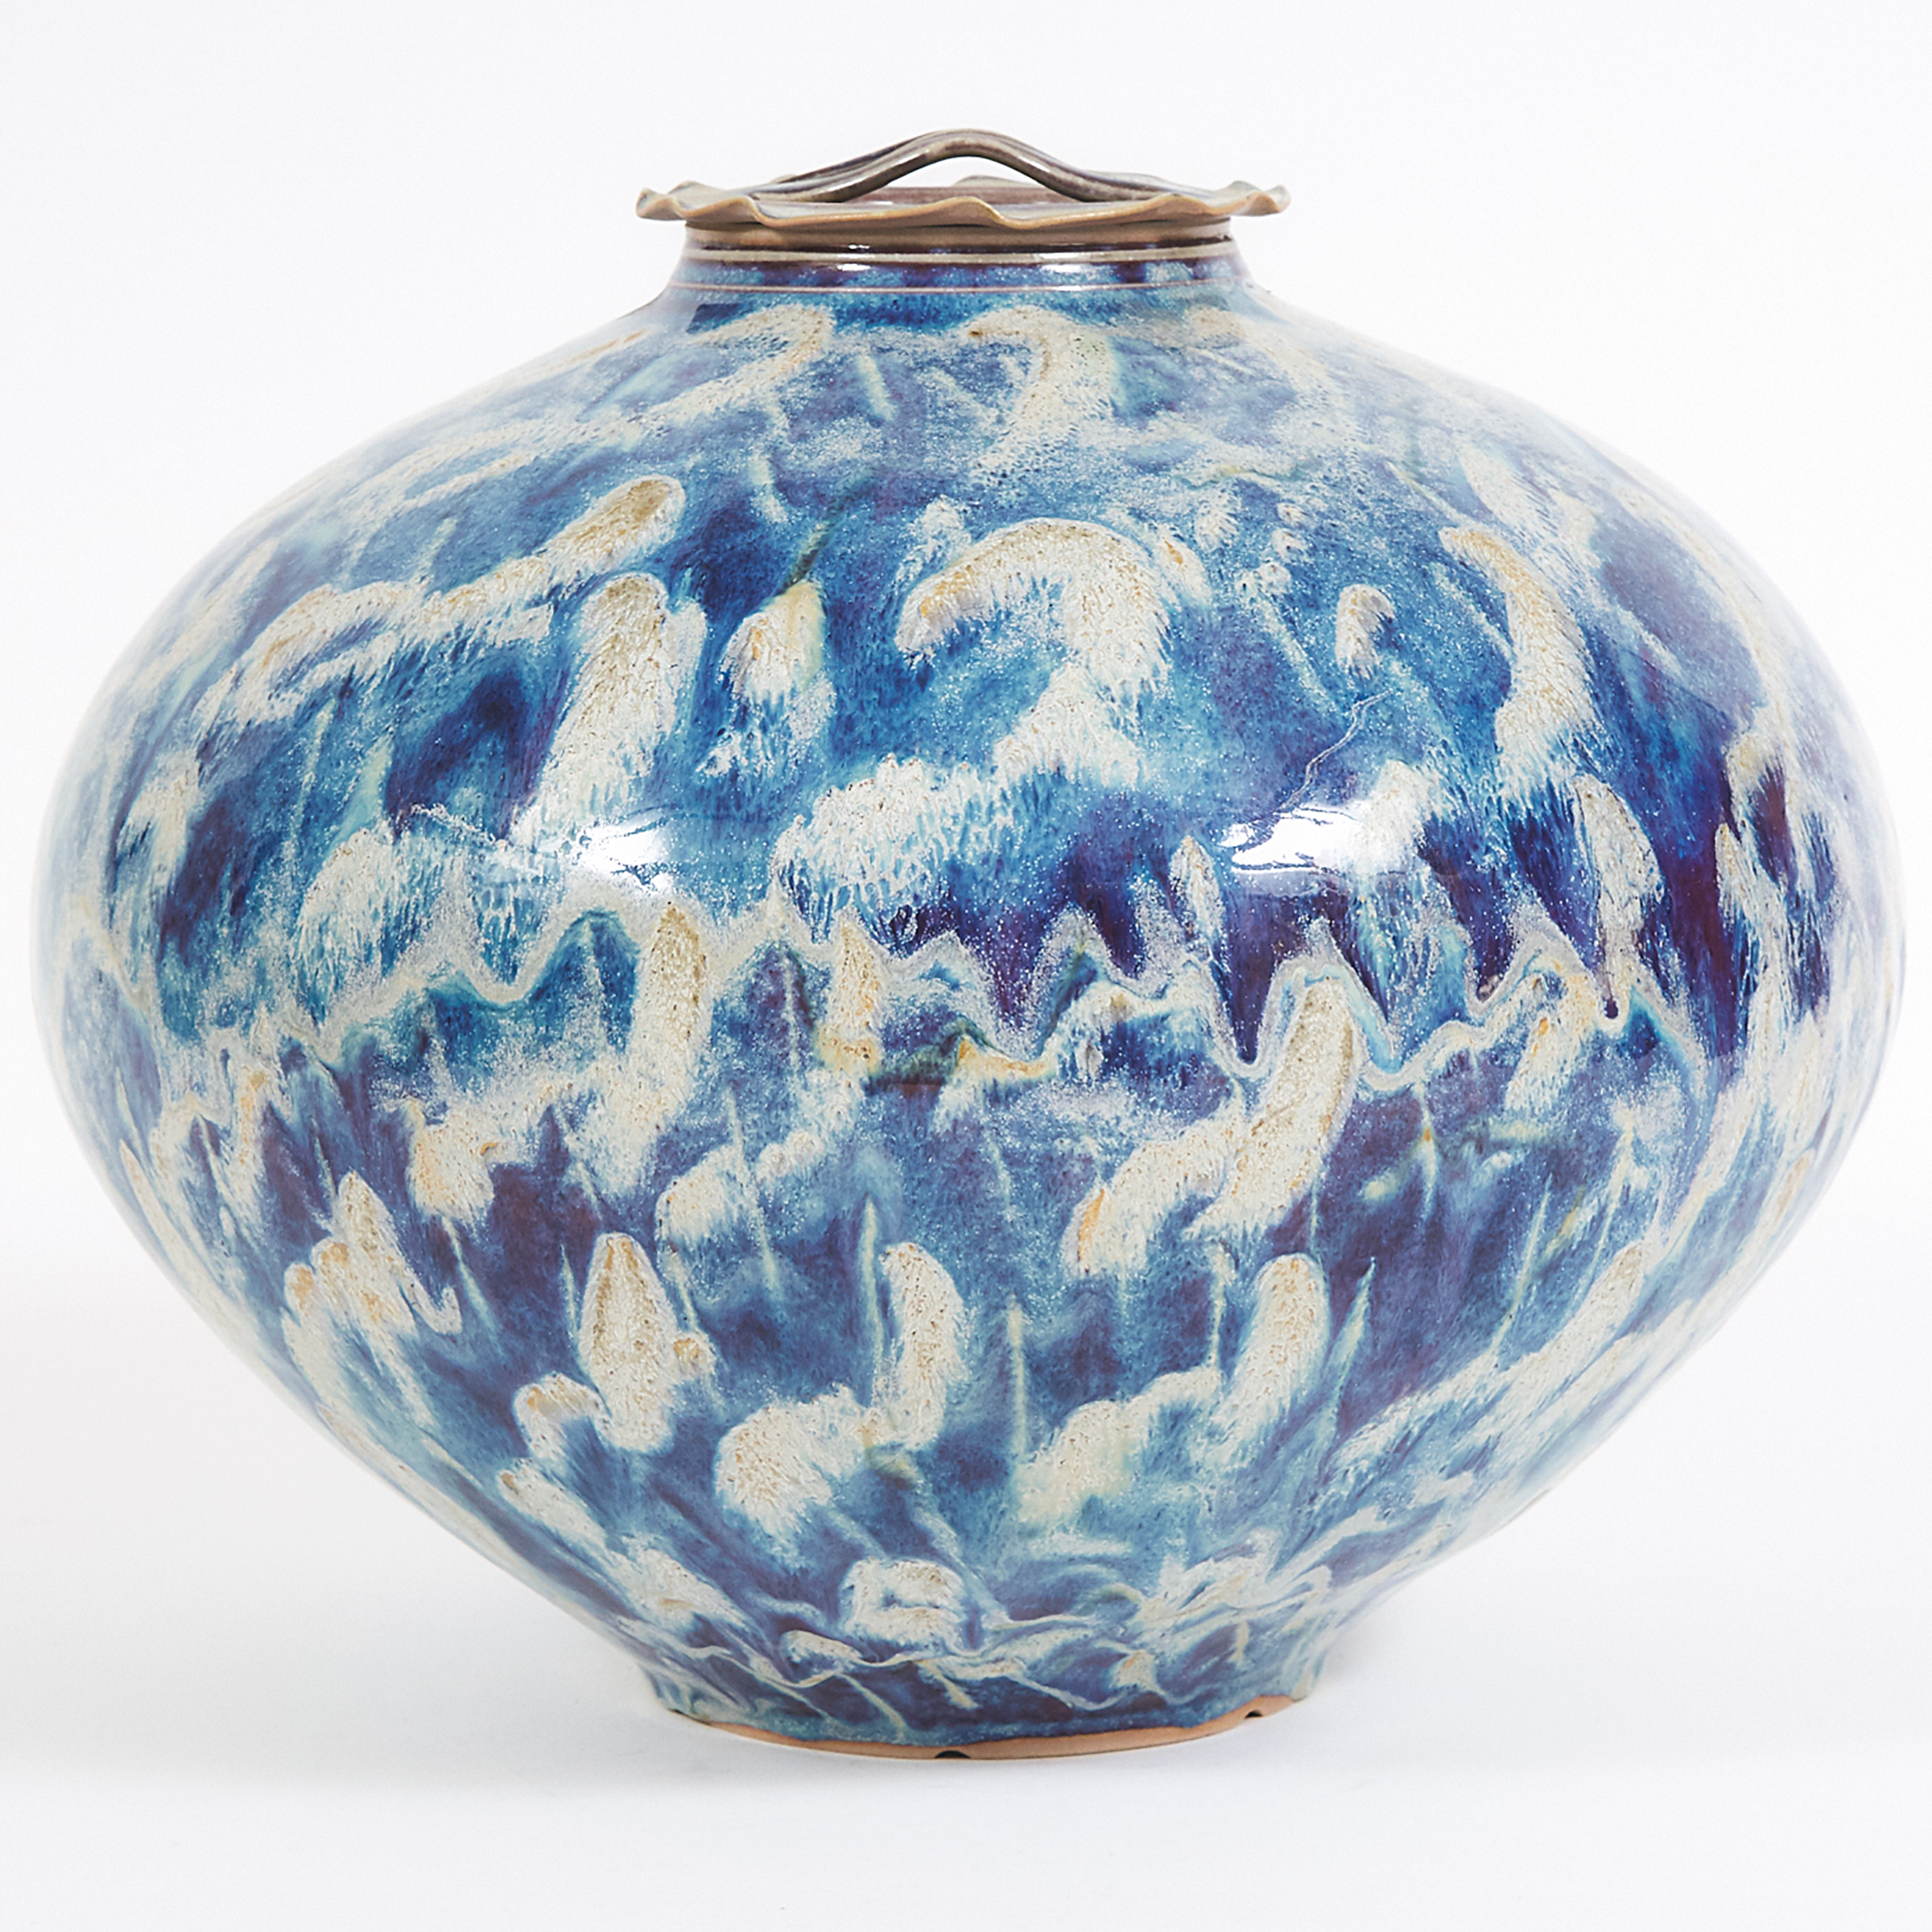 Kayo O'Young (Canadian, b.1950), Light Blue and White Glazed Covered Vase, 1992